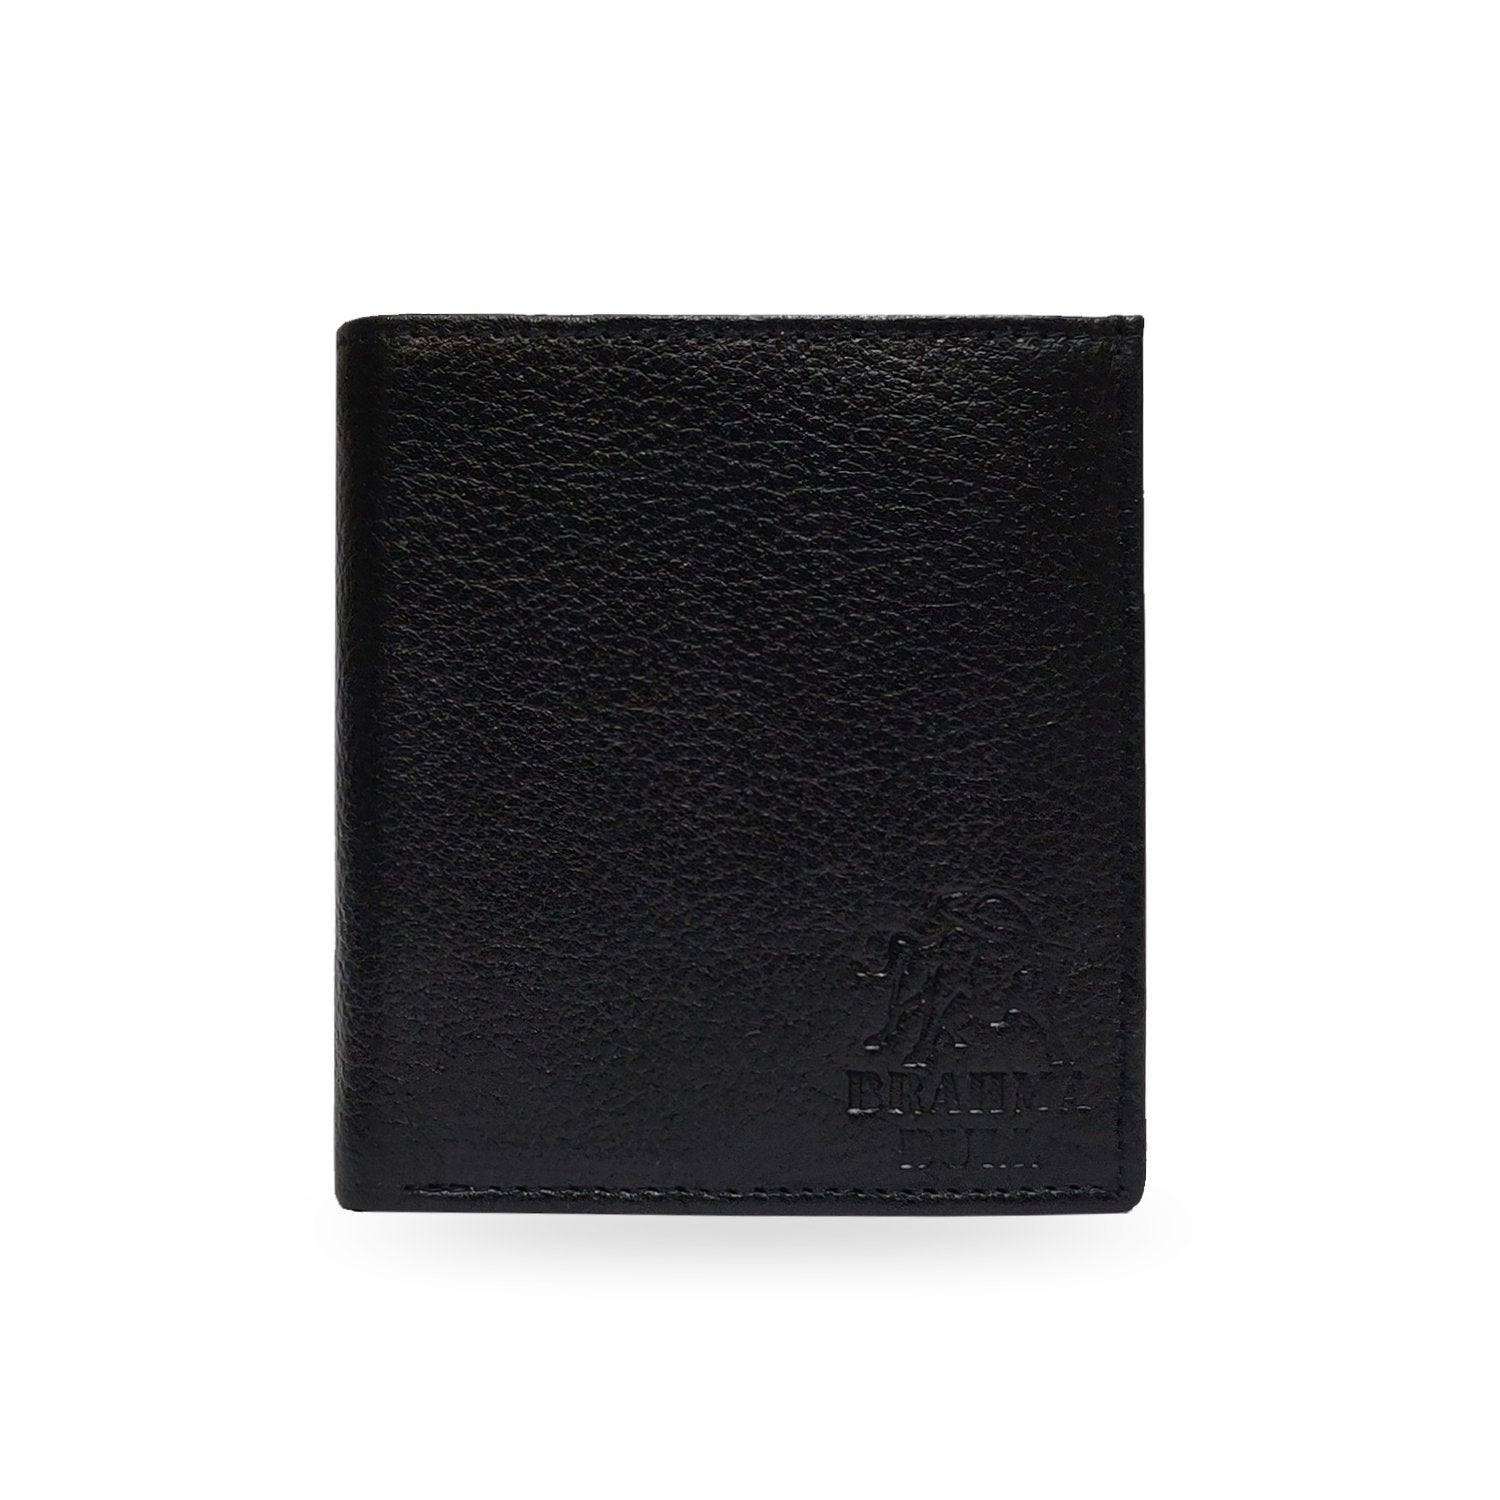 Brahma Bull Side Fold RFID Black Leather Wallet - Brahma Bull - Men's Grooming